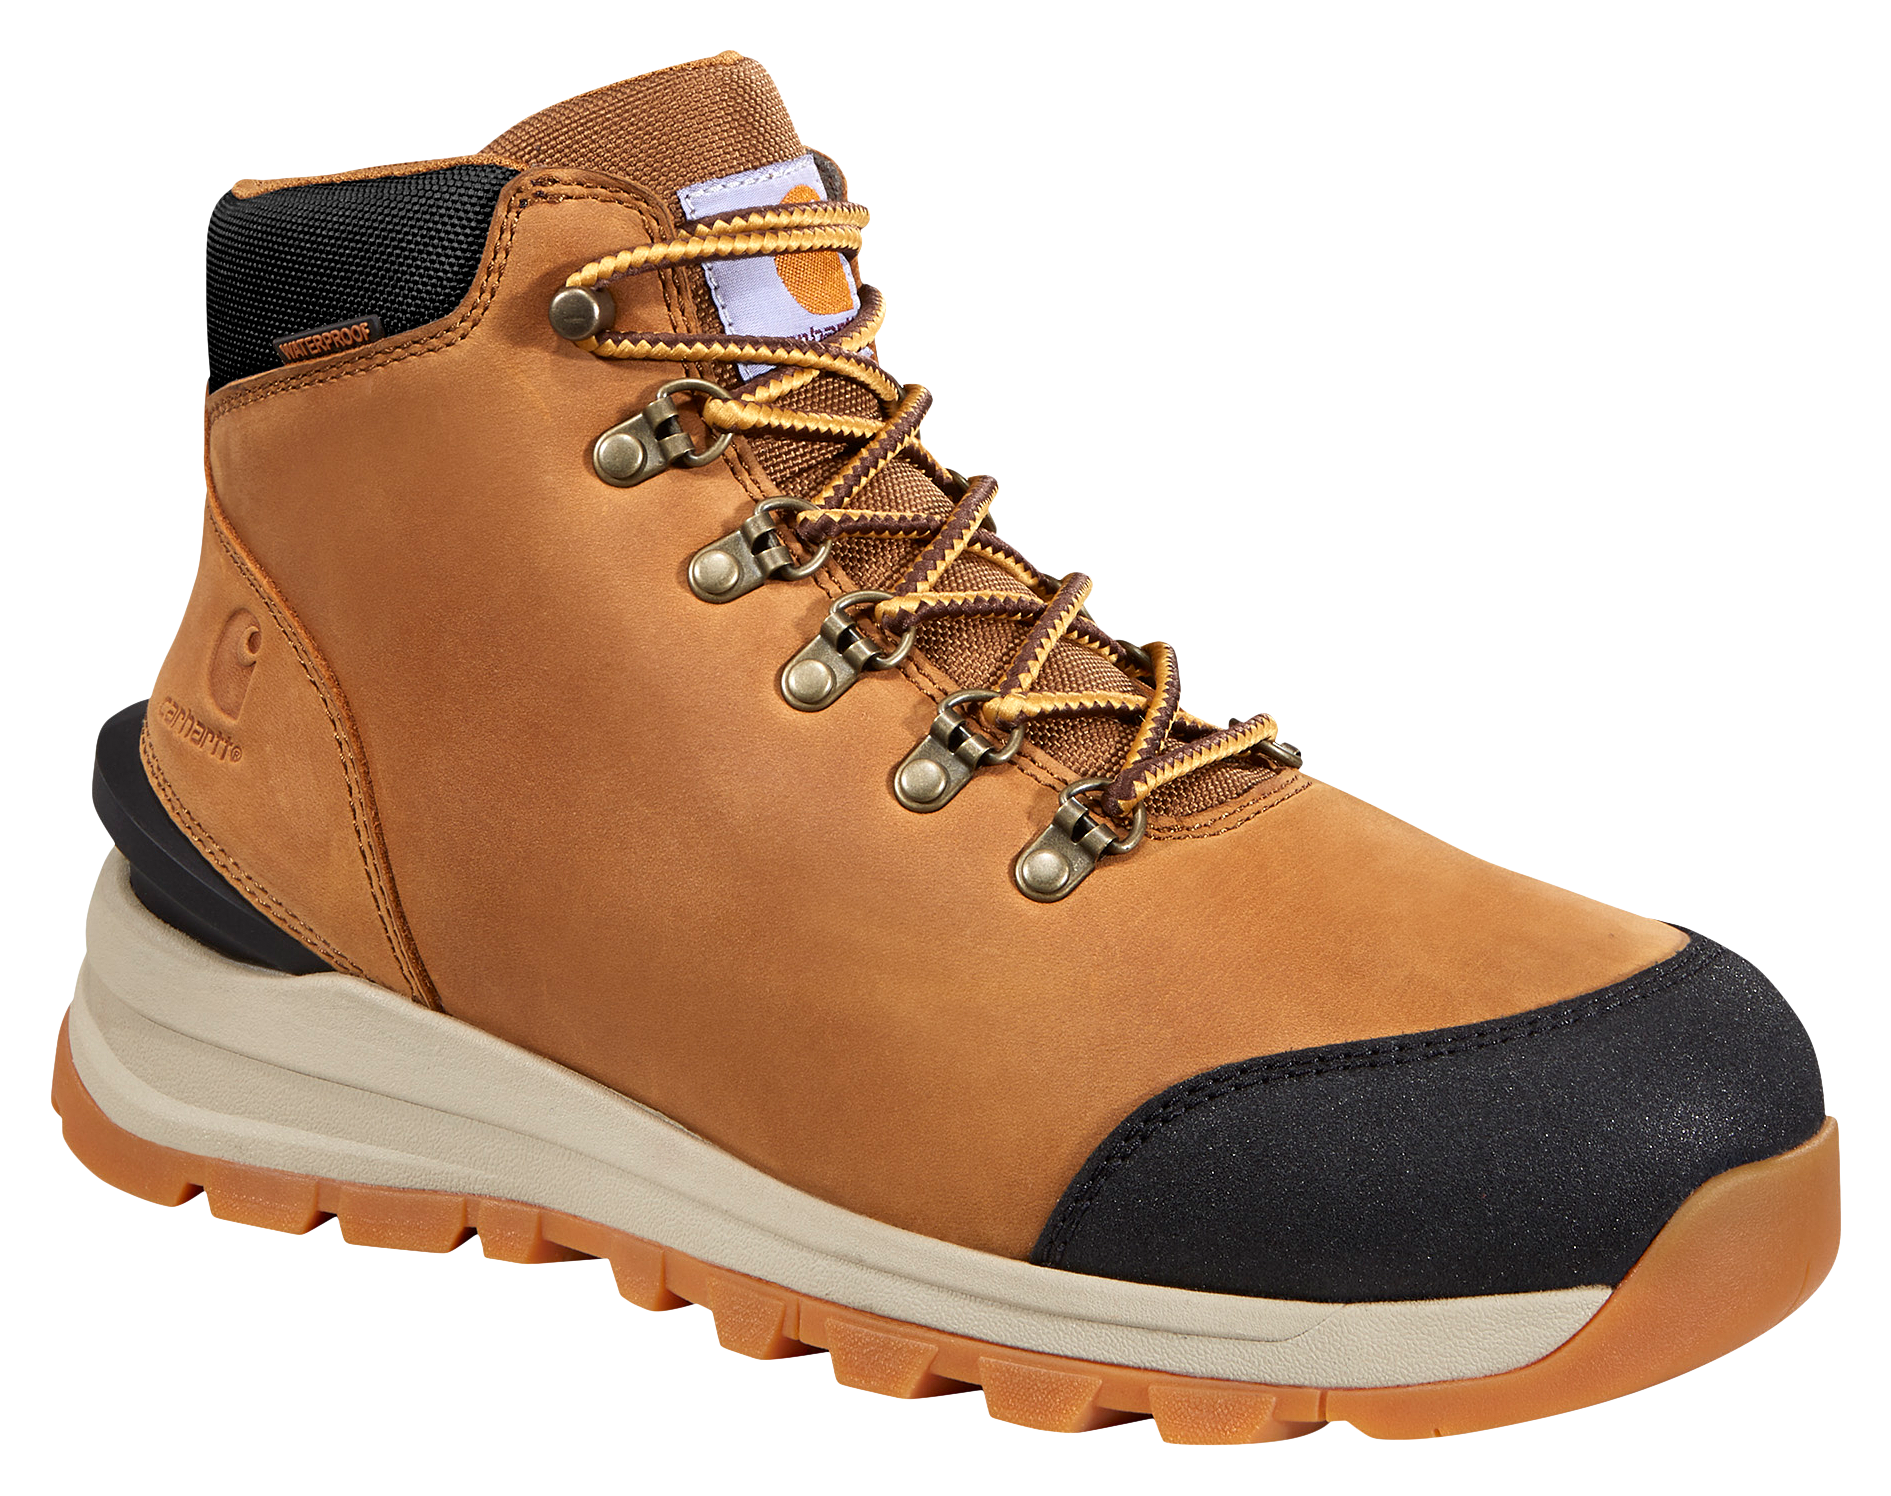 Carhartt Gilmore Waterproof Hiking Boots for Men - Brown - 14M